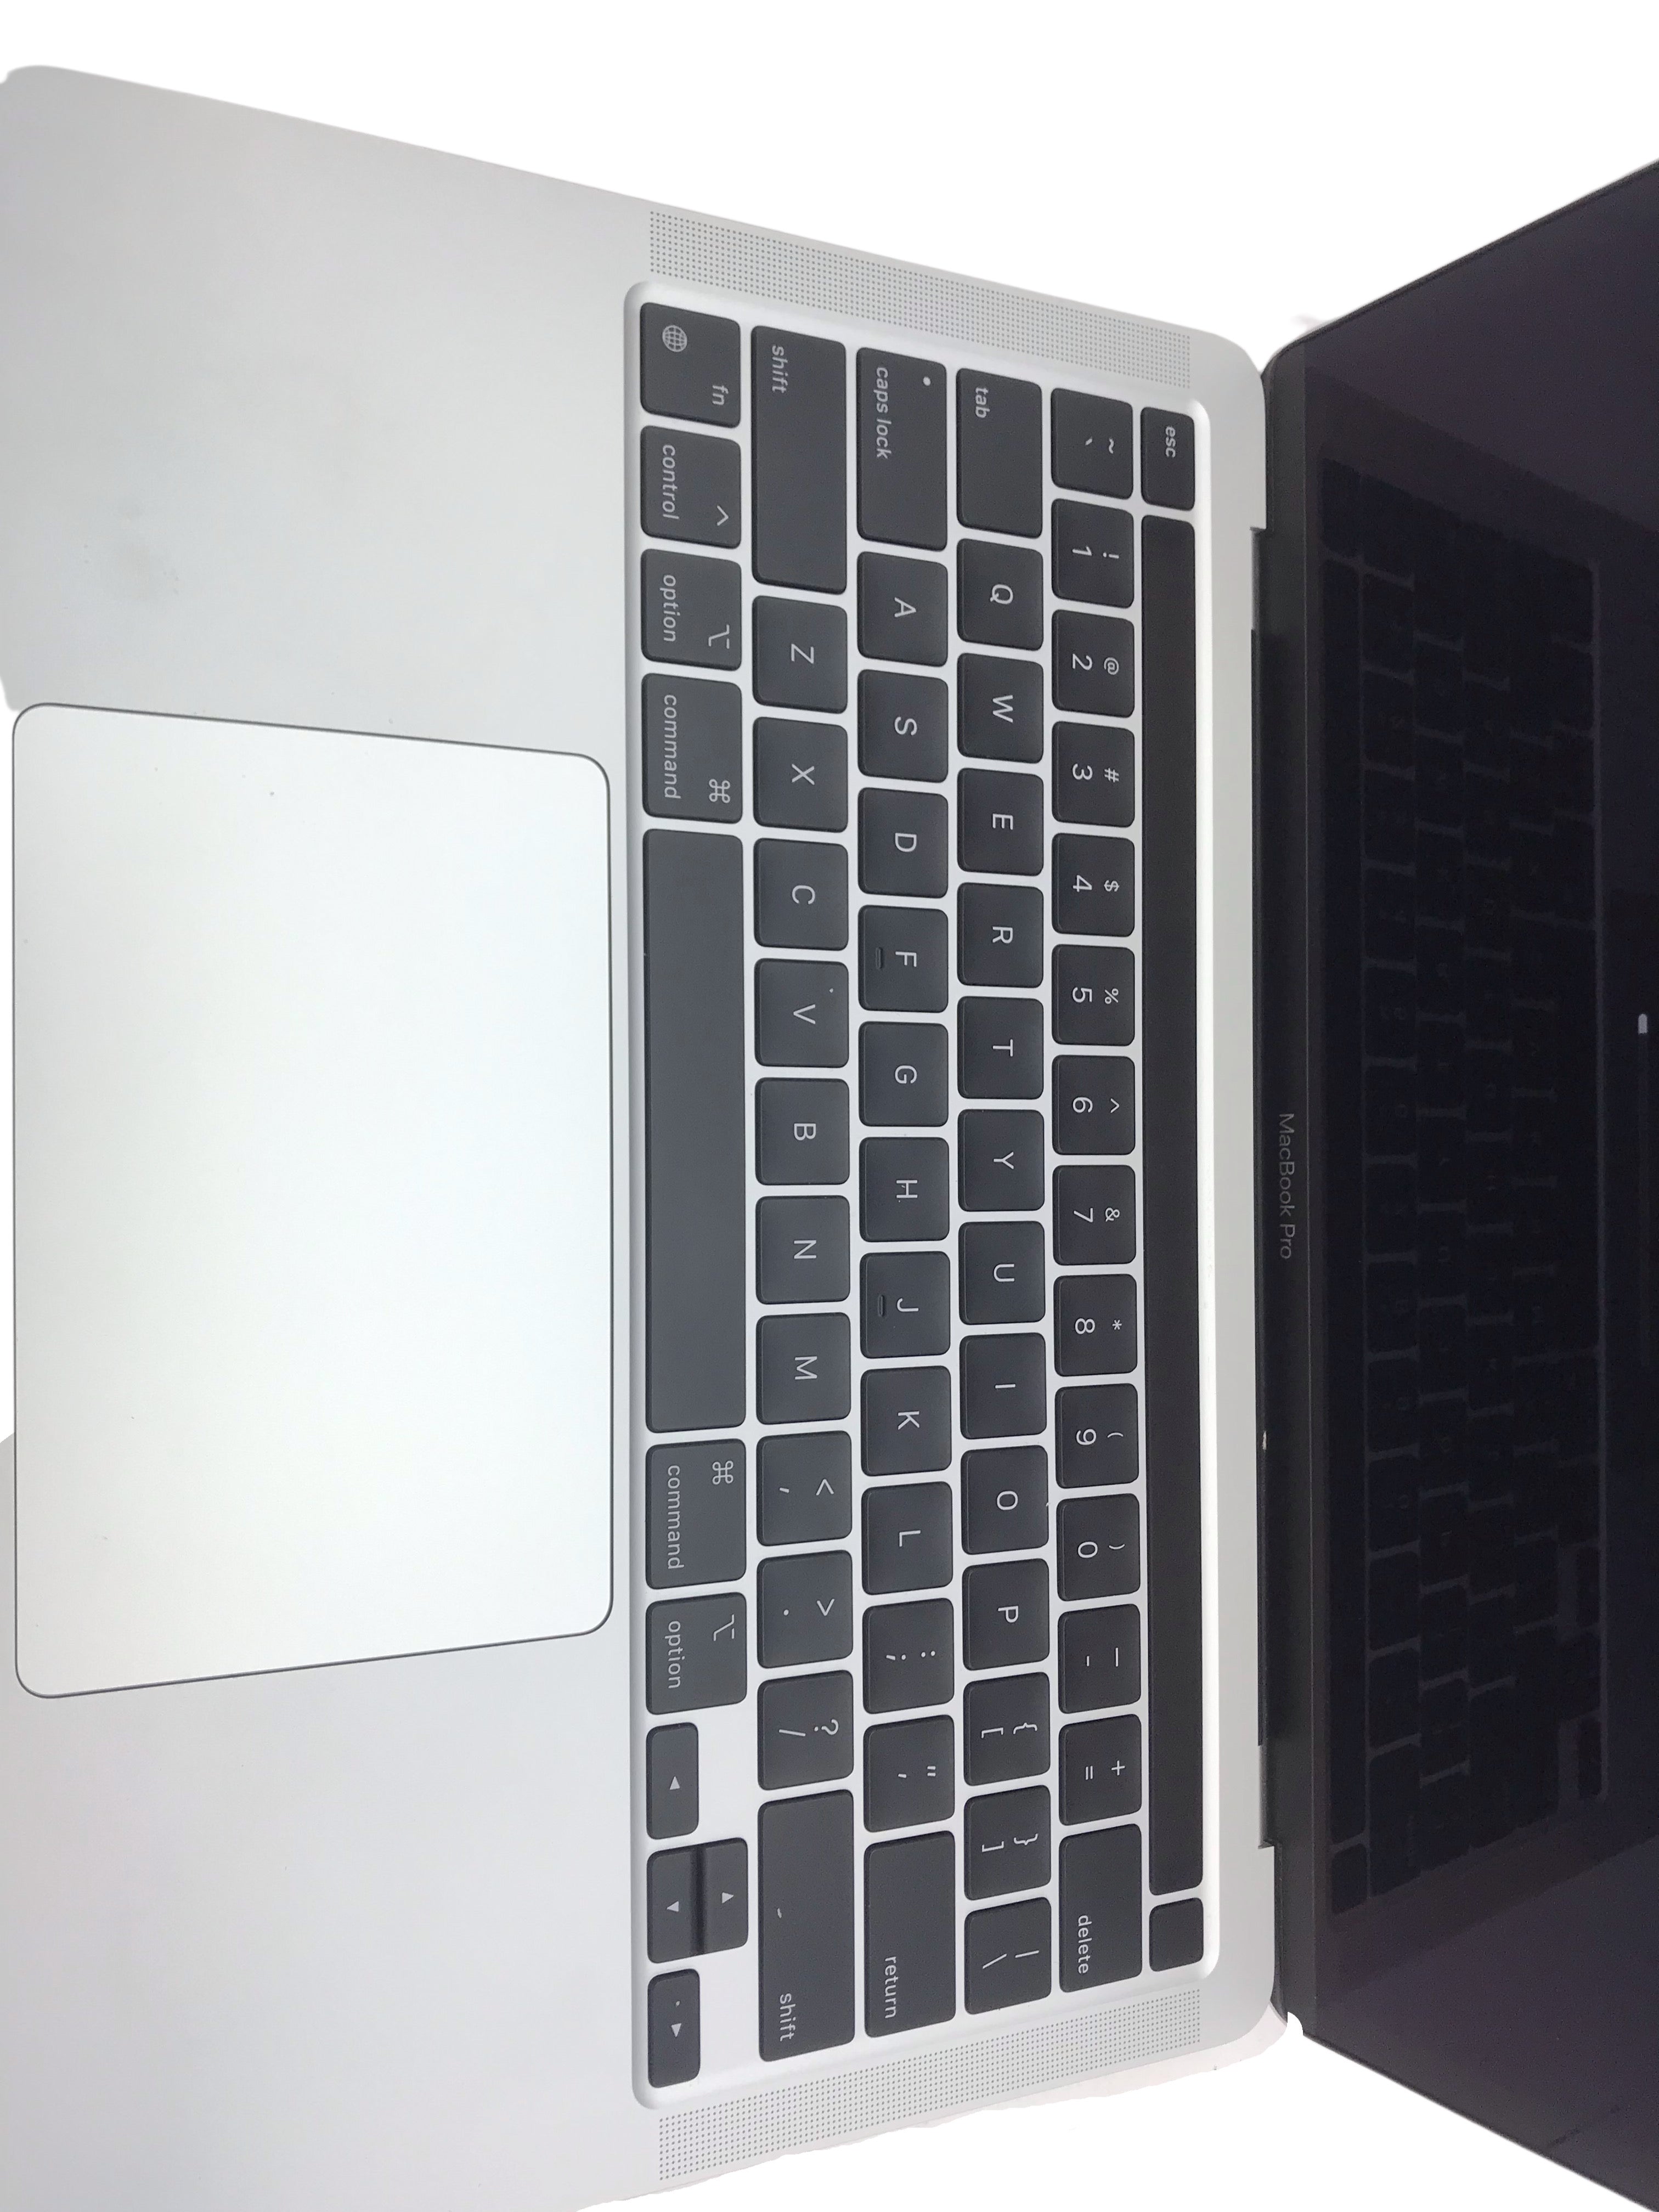 Apple MacBook Pro M1 2020 13.3" | 8 Core | Touchbar 16GB 512GB A2338